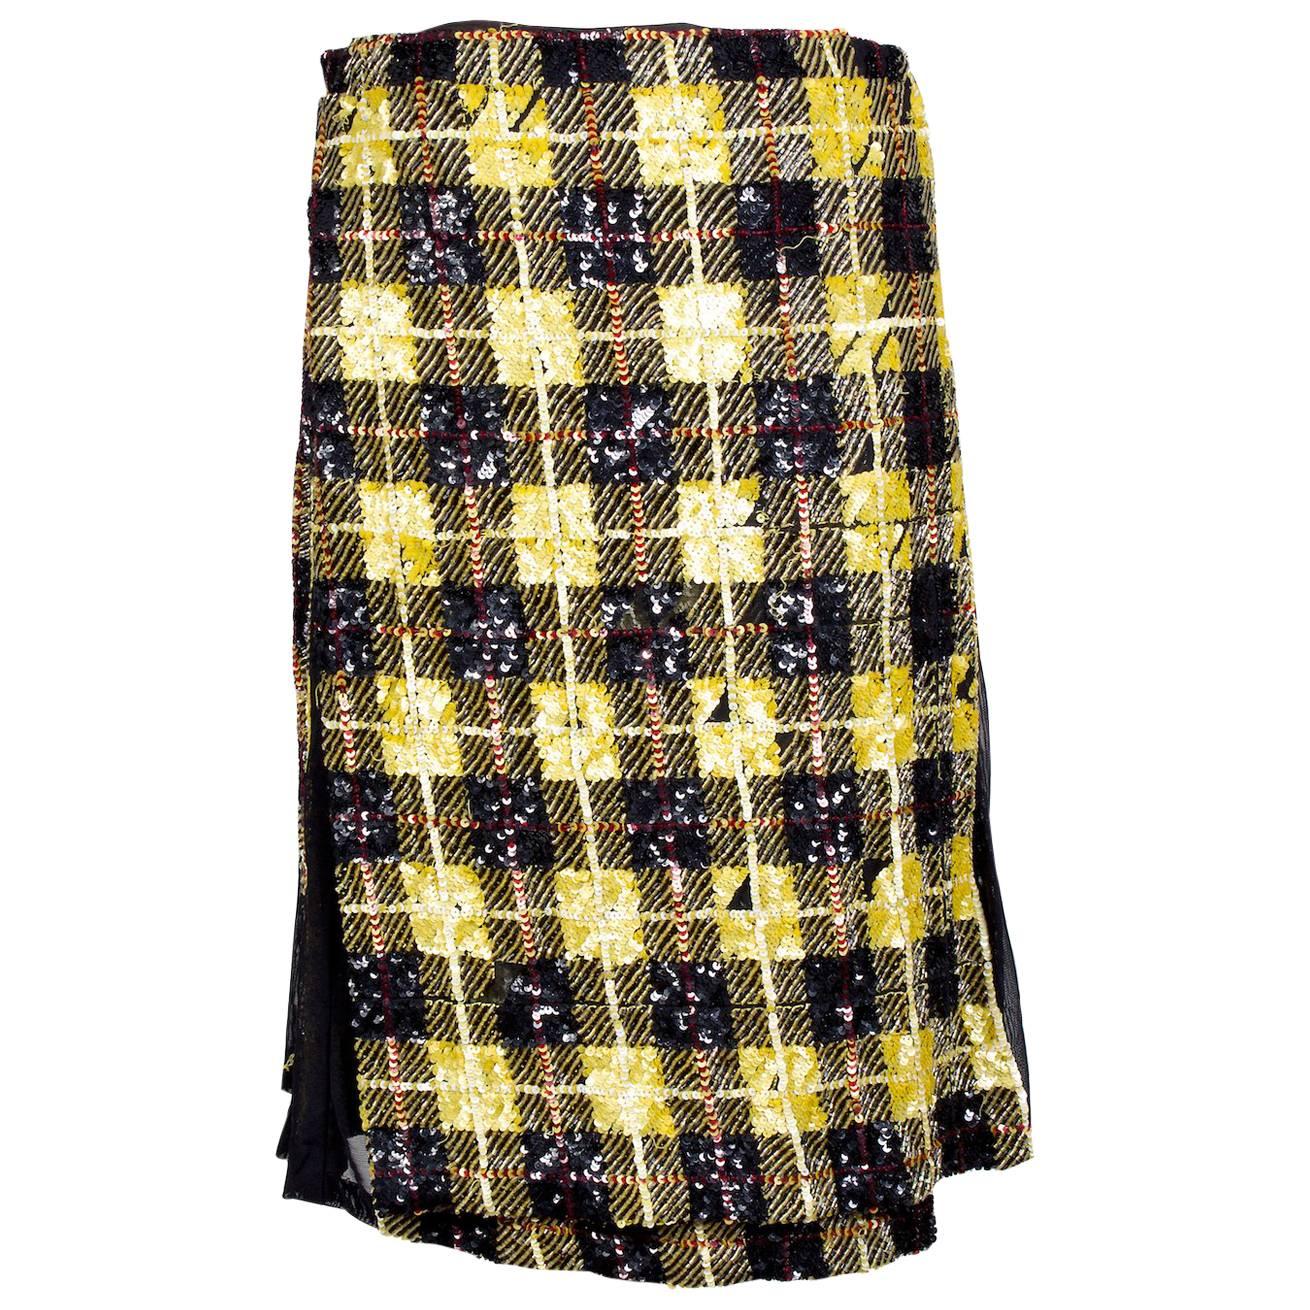 Jean Paul Gaultier Sequin Plaid Skirt with Mesh Pleats circa 2000s